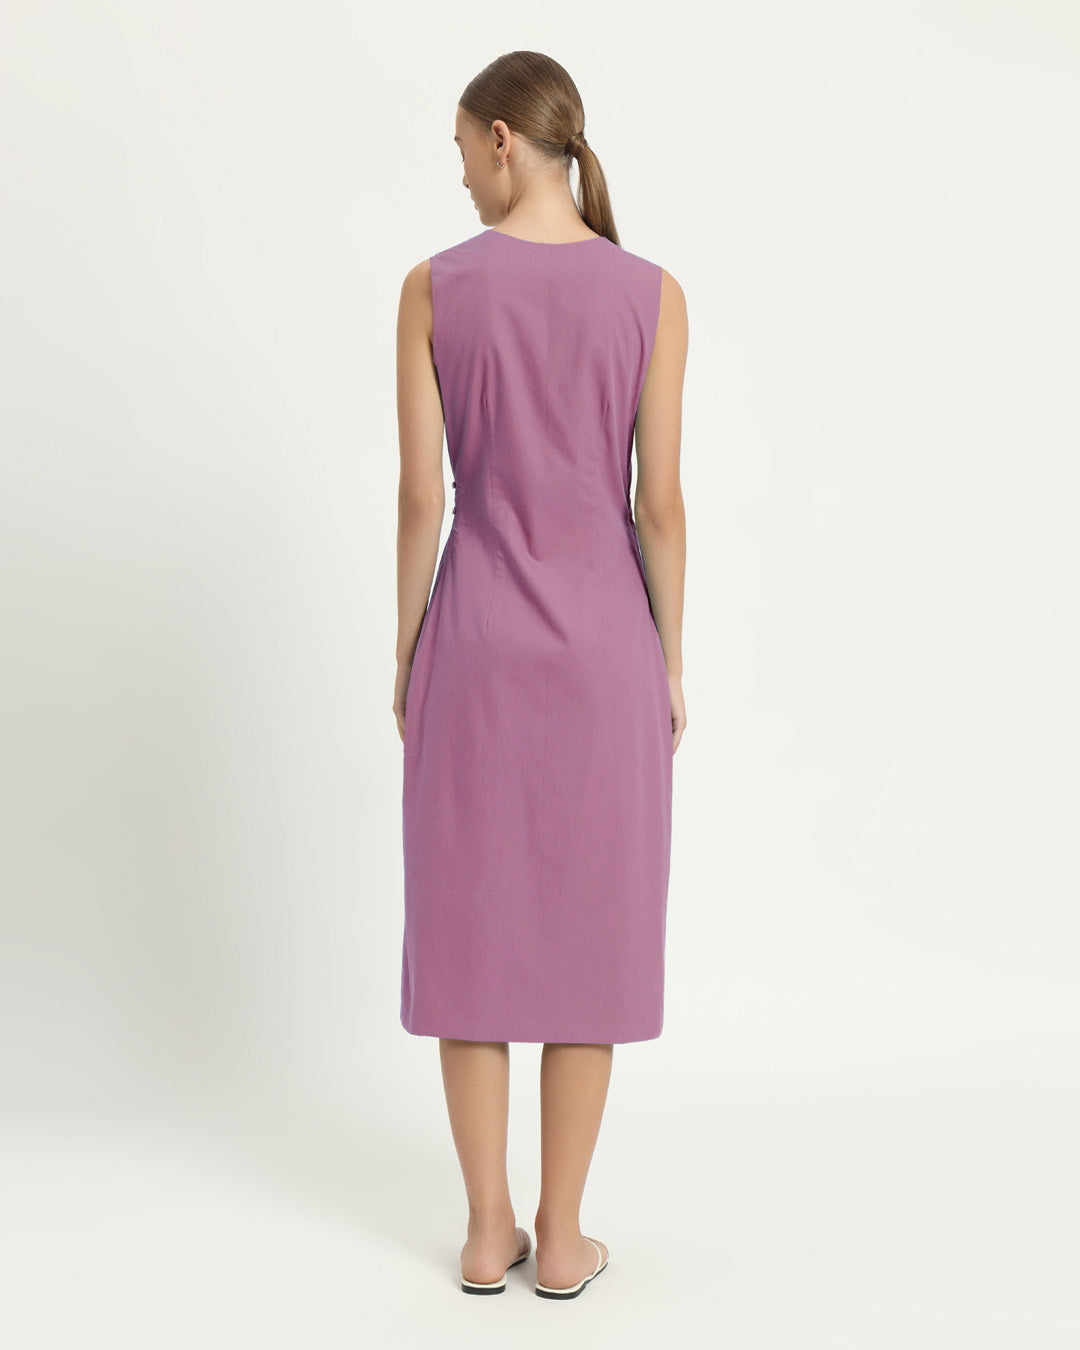 The Aurich Purple Swirl Cotton Dress